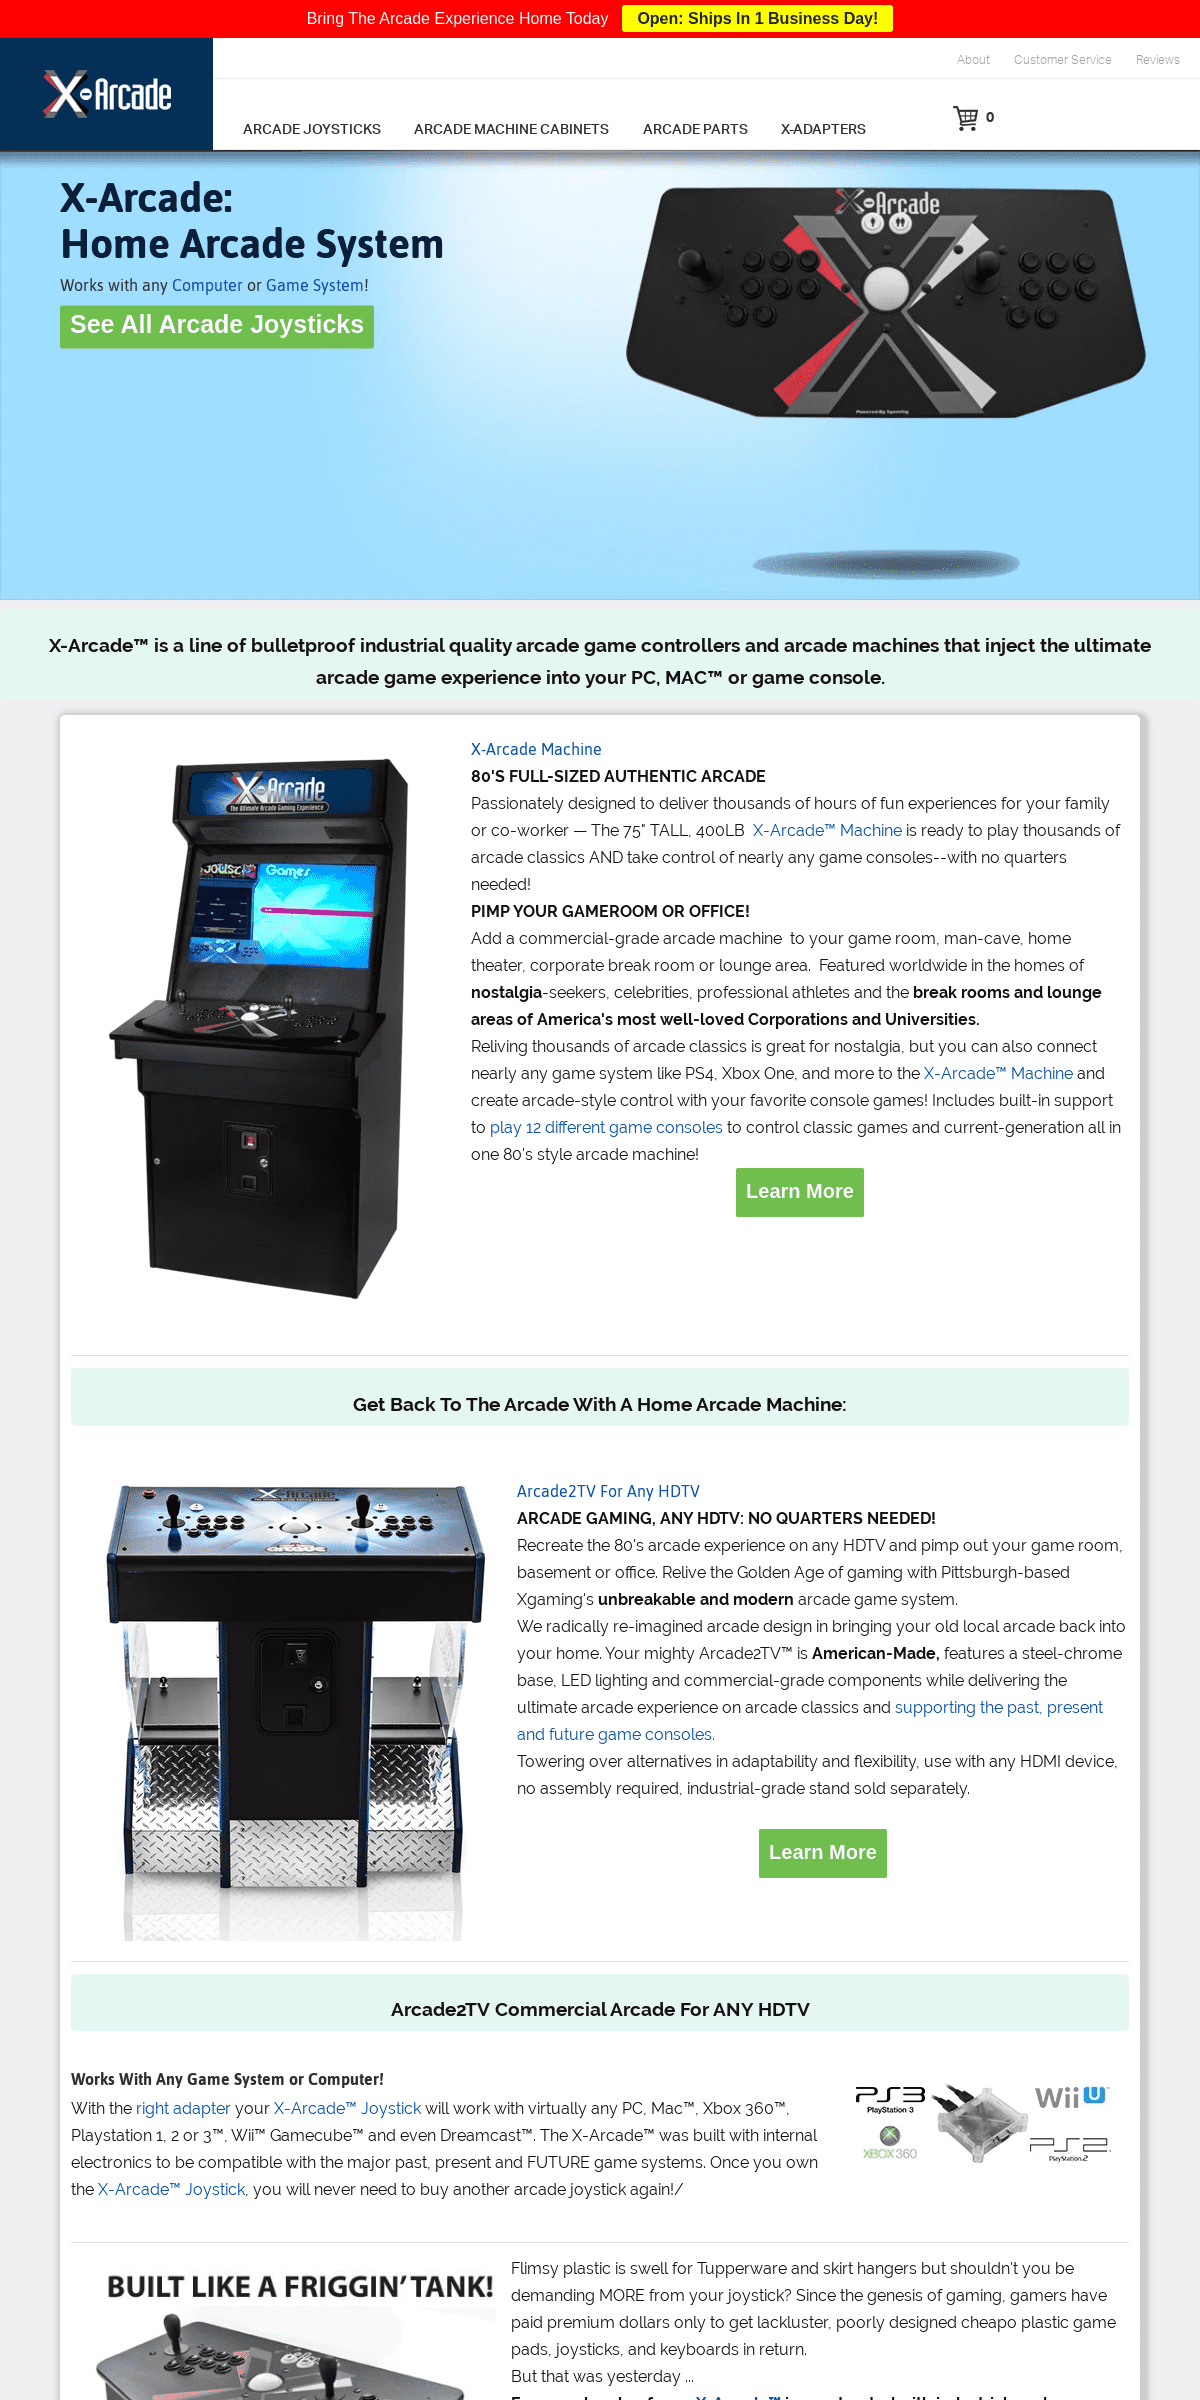 A complete backup of x-arcade.com